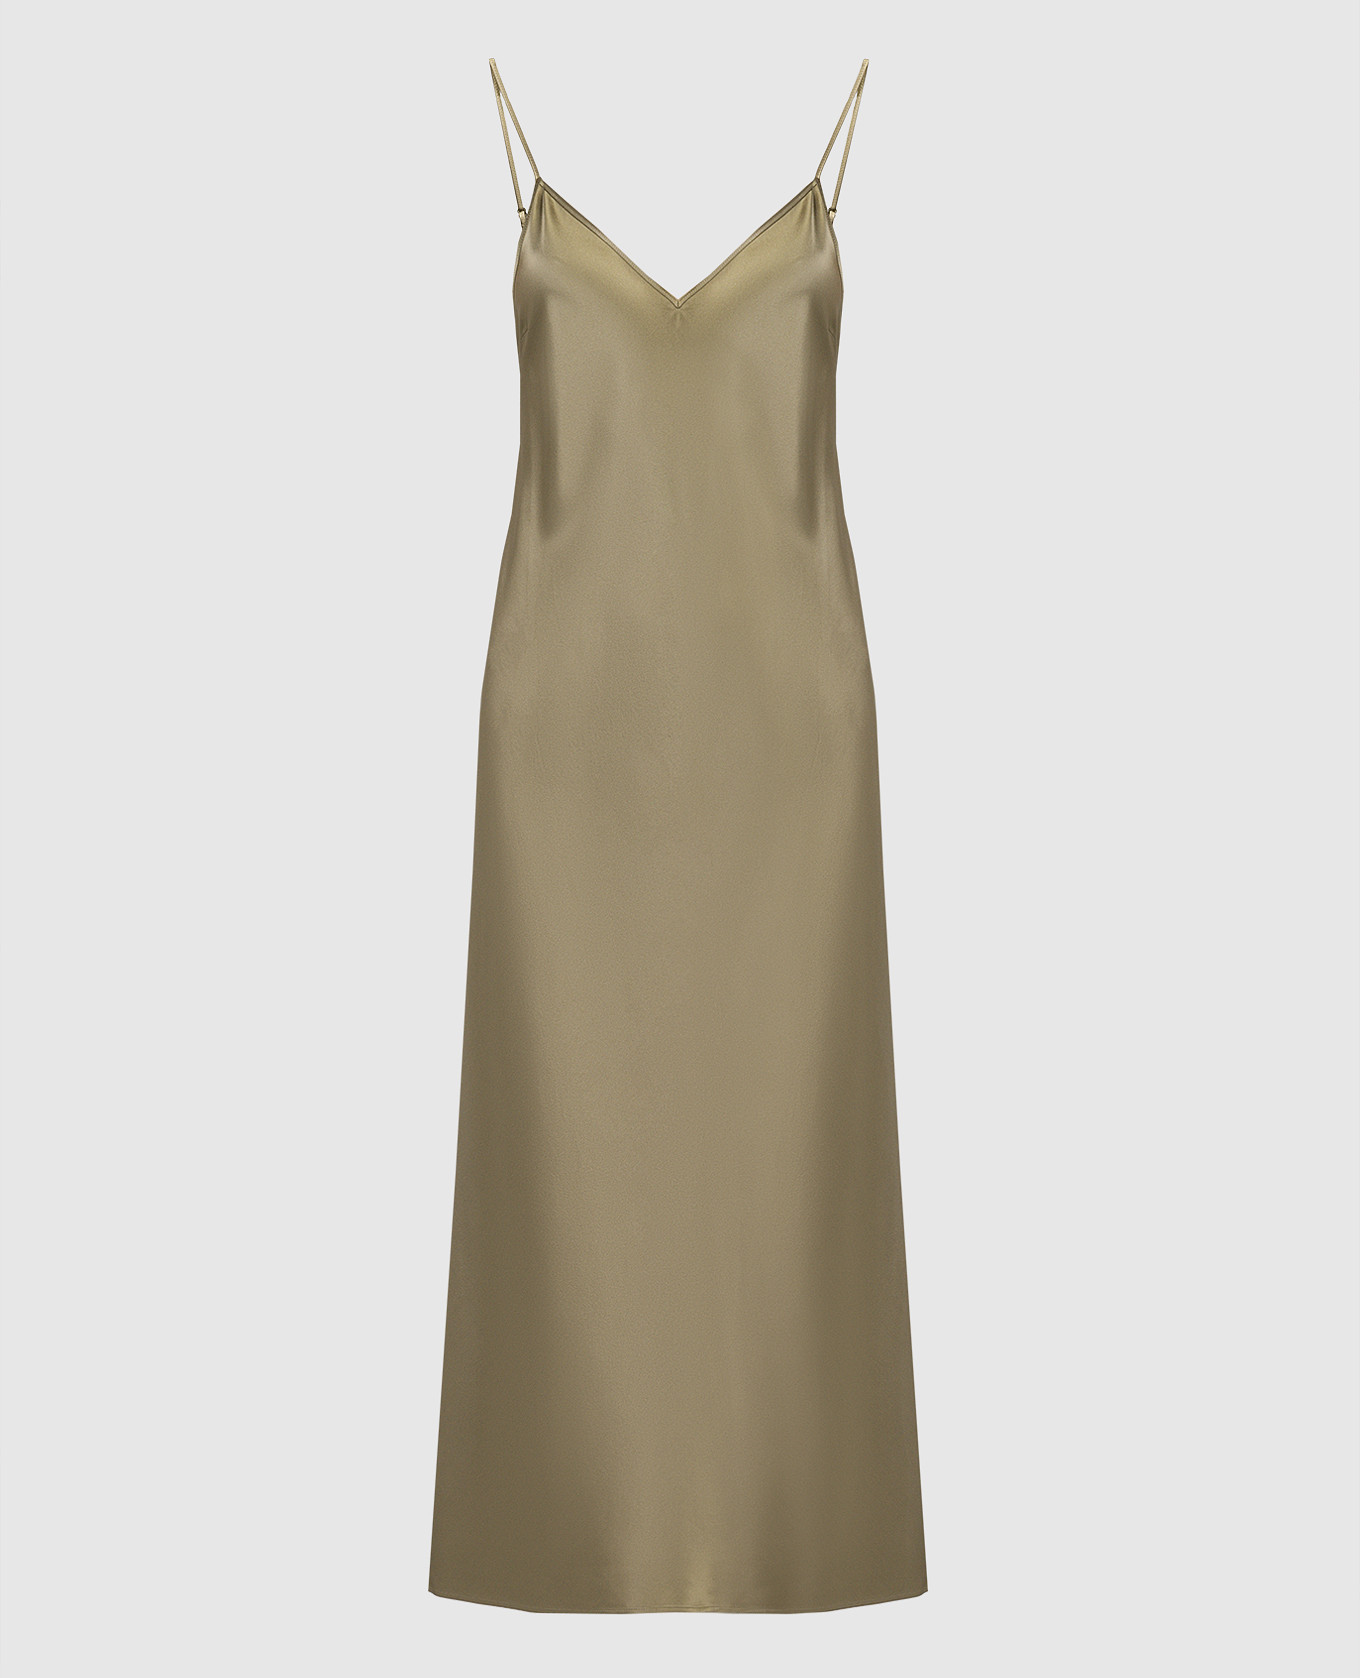 Dress-combination Clea khaki color made of silk